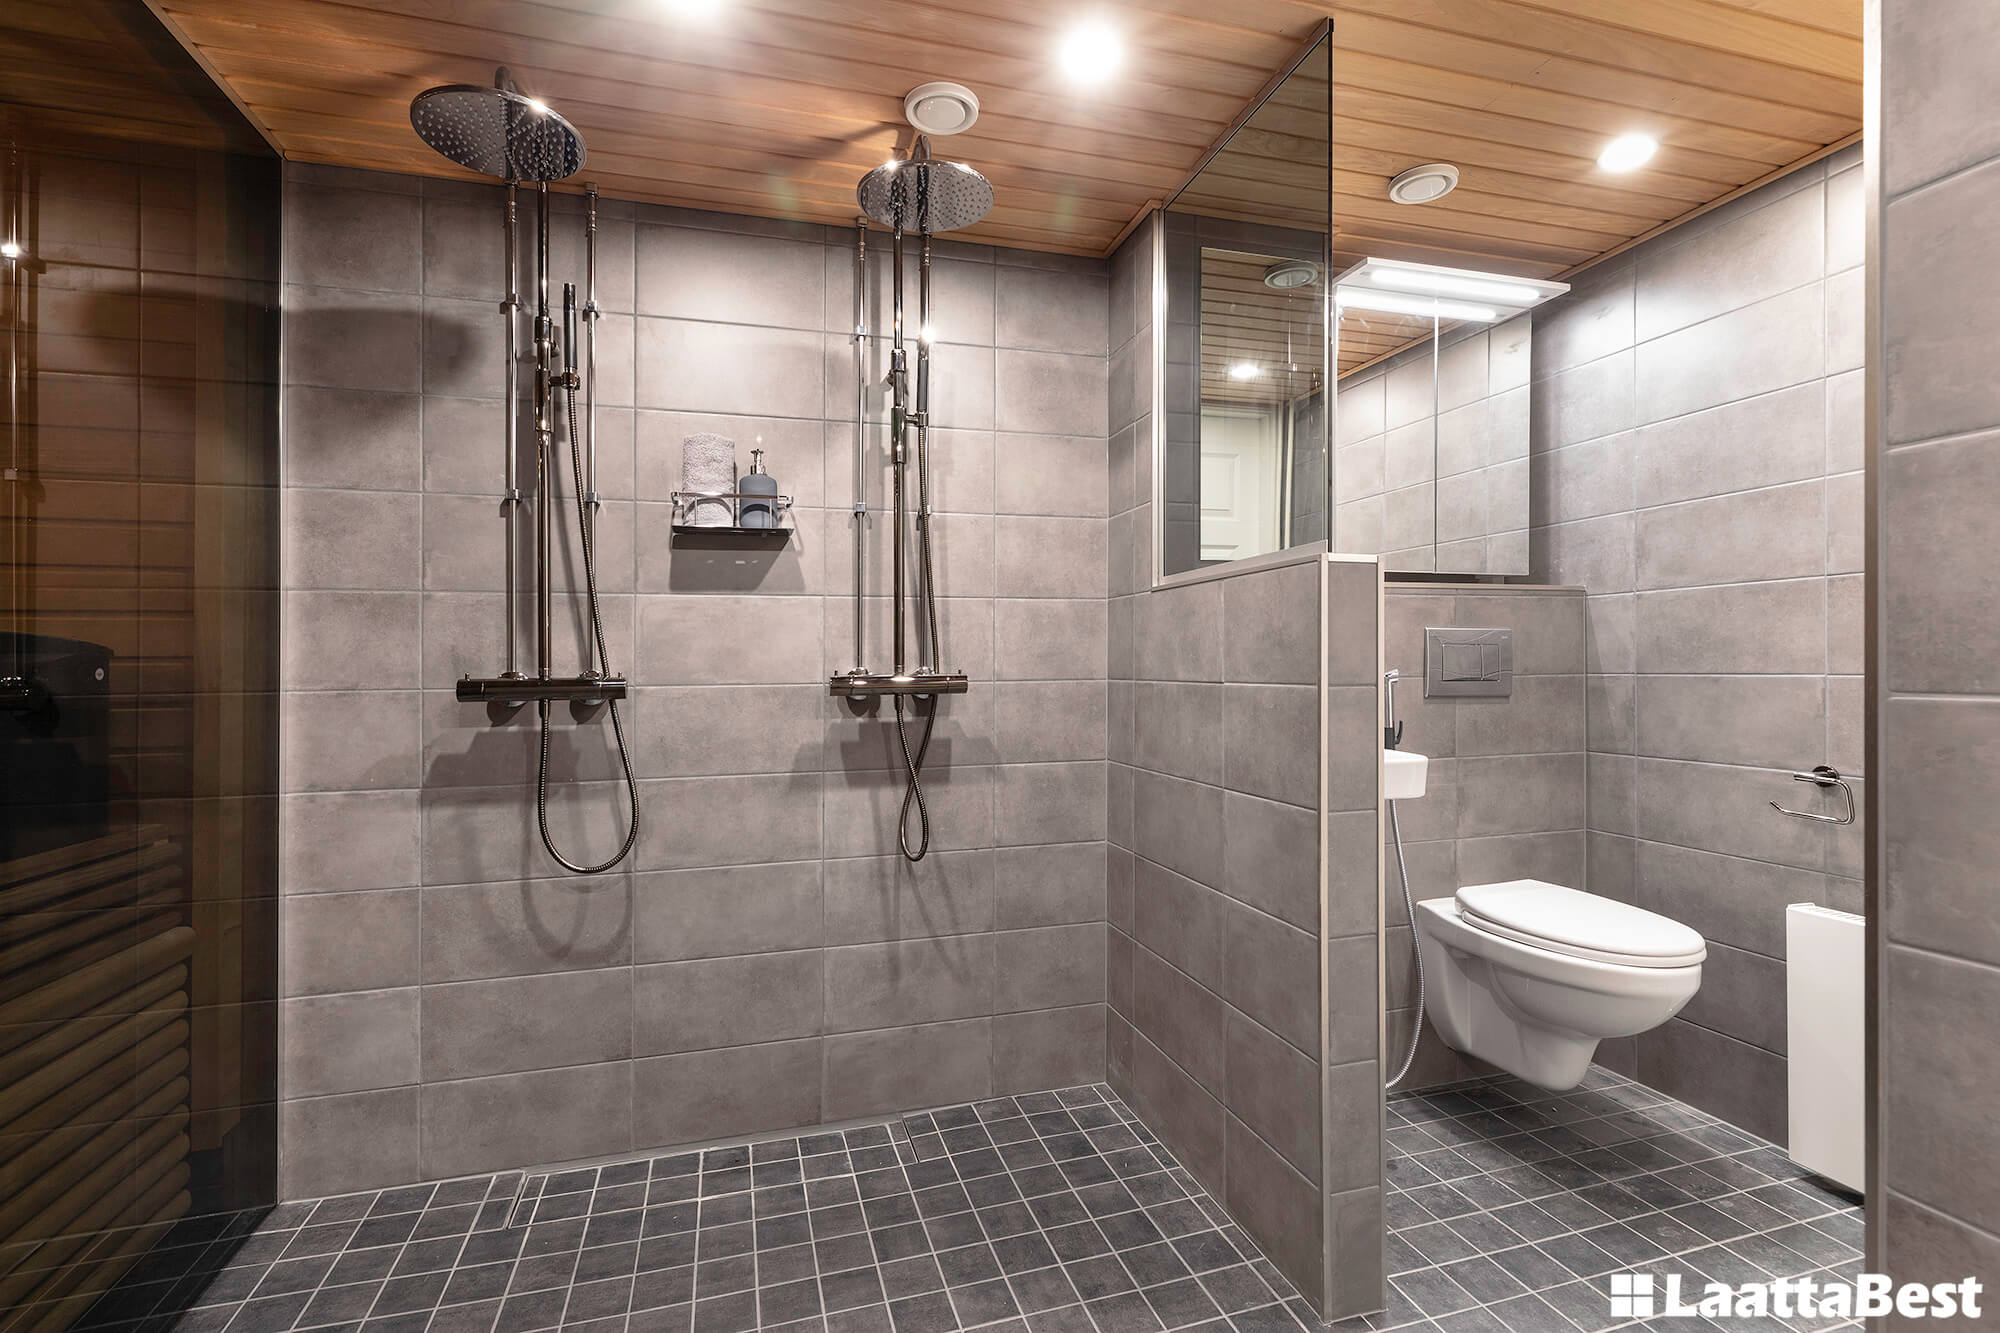 Kylpyhuone, sauna ja WC-tila - remontti | LaattaBest